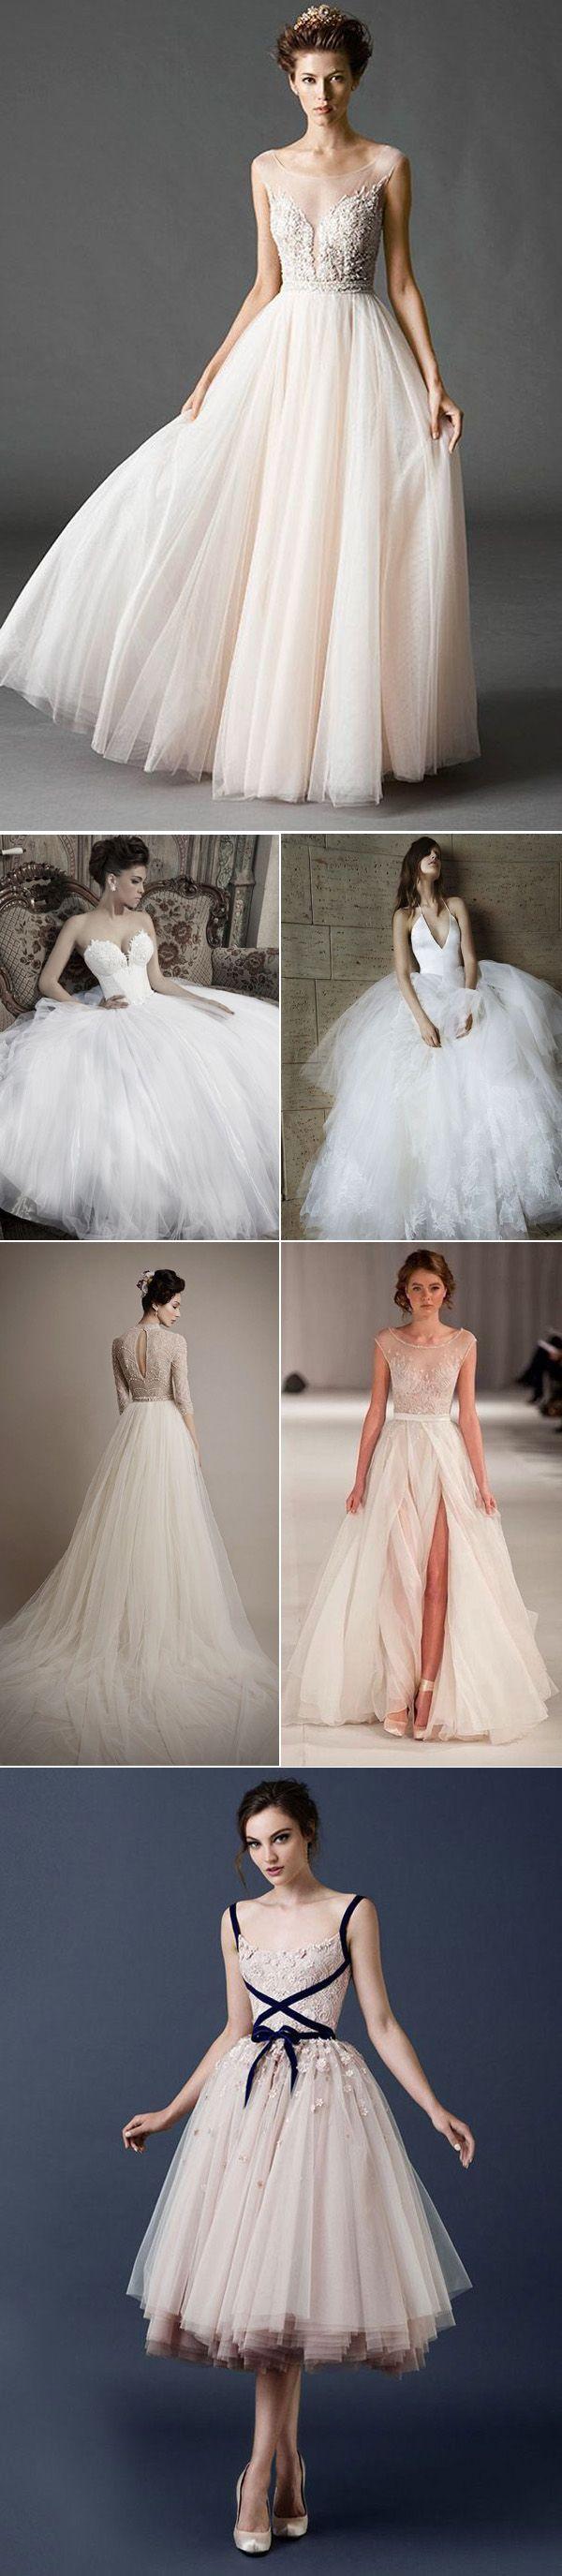 Wedding - Top 9 Trends For Wedding Dresses 2015